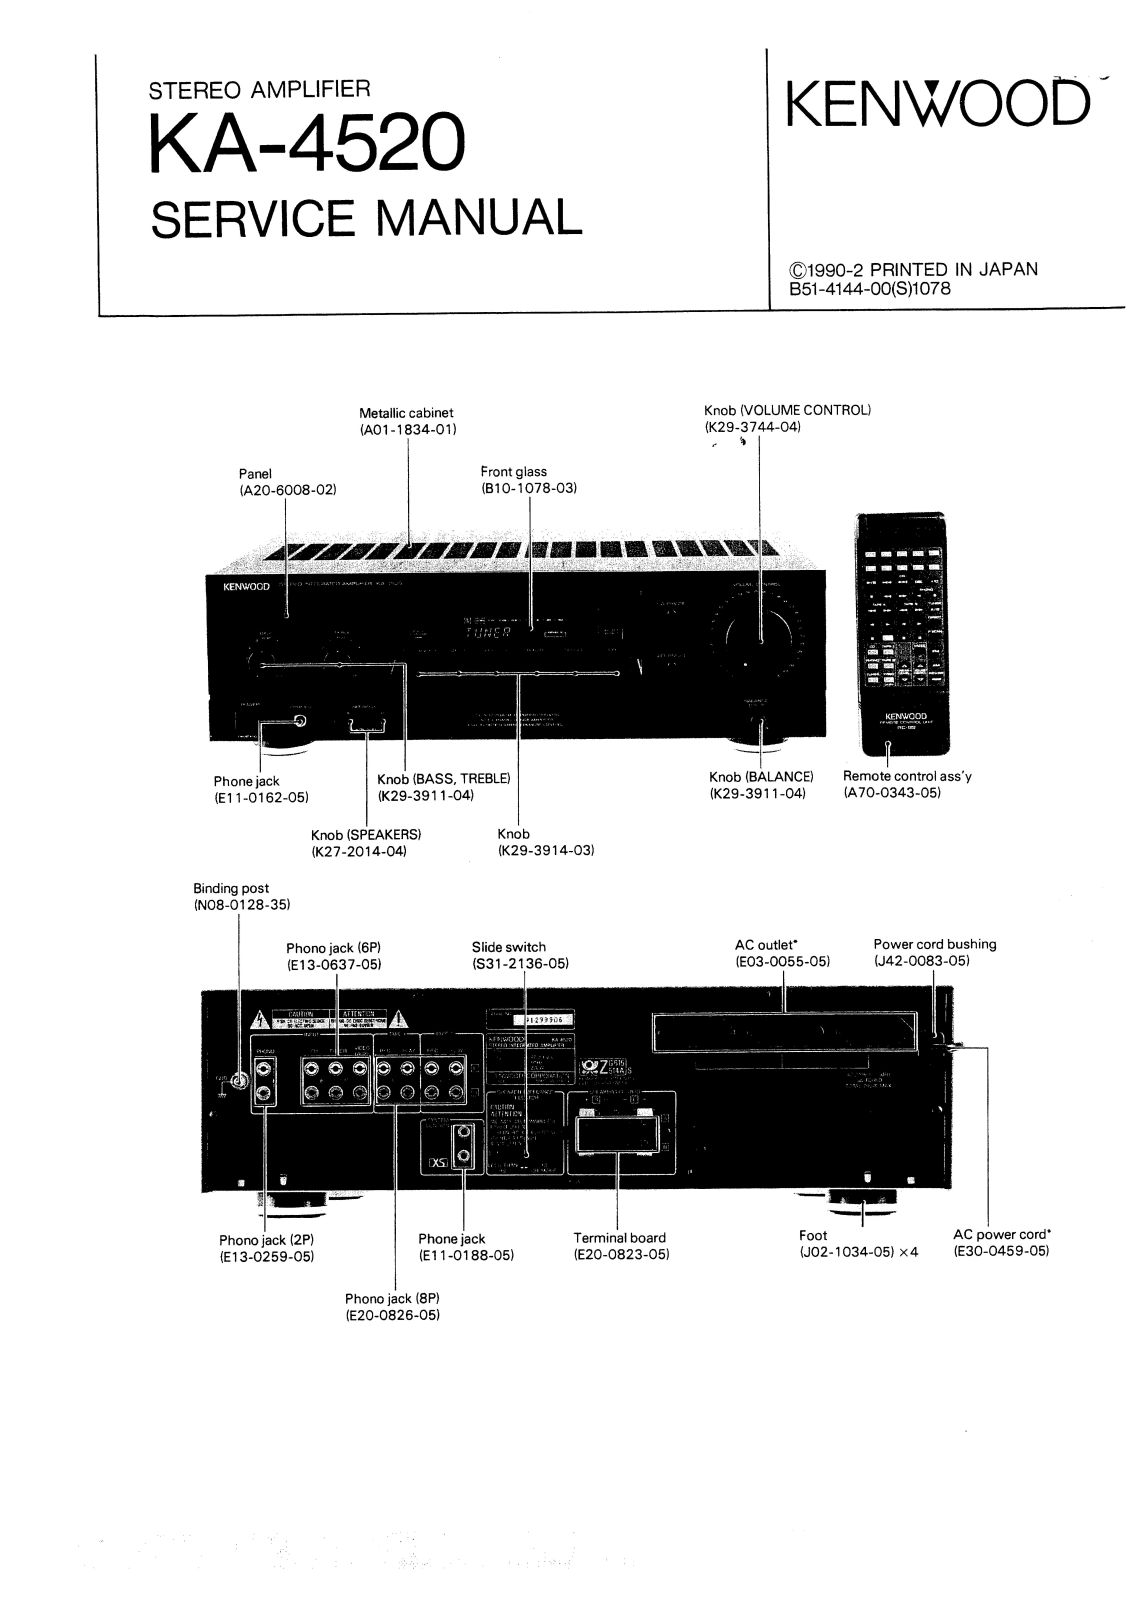 Kenwood KA-4520 Service manual